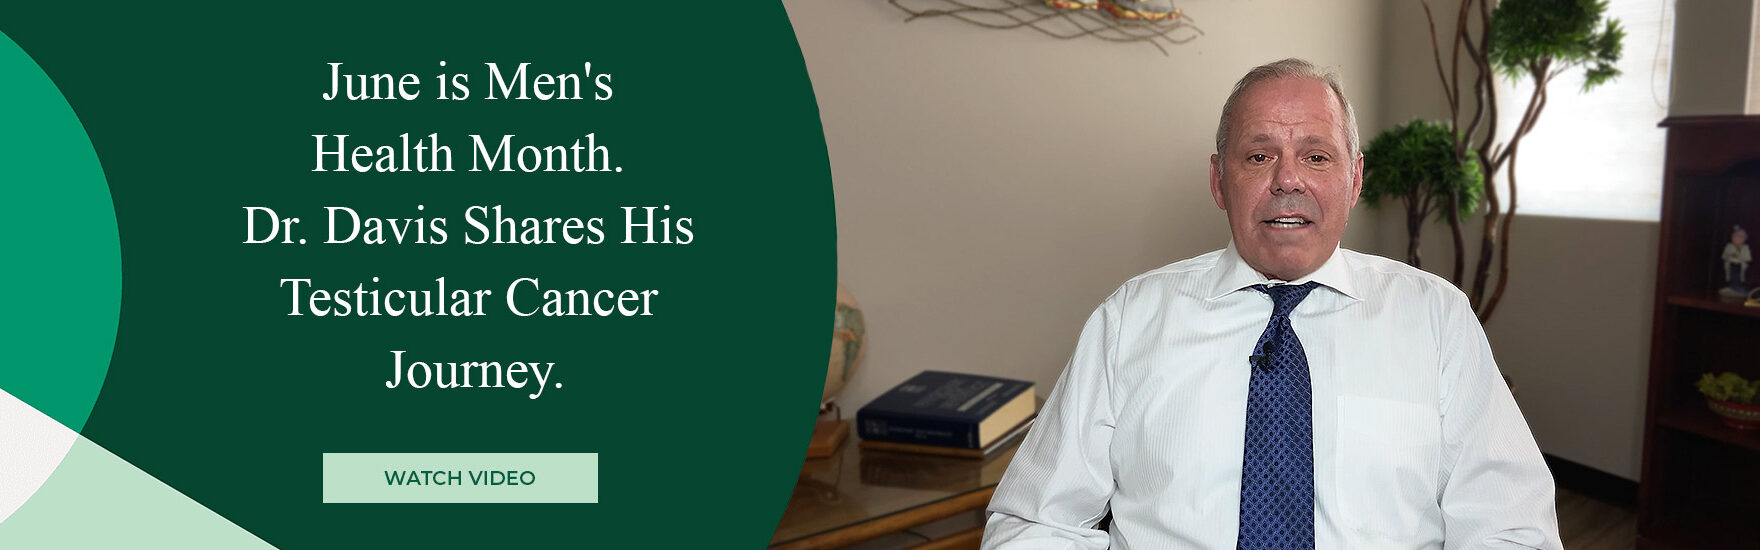 June is Men's Health Month. Dr. Davis Shares His Testicular Cancer Journey